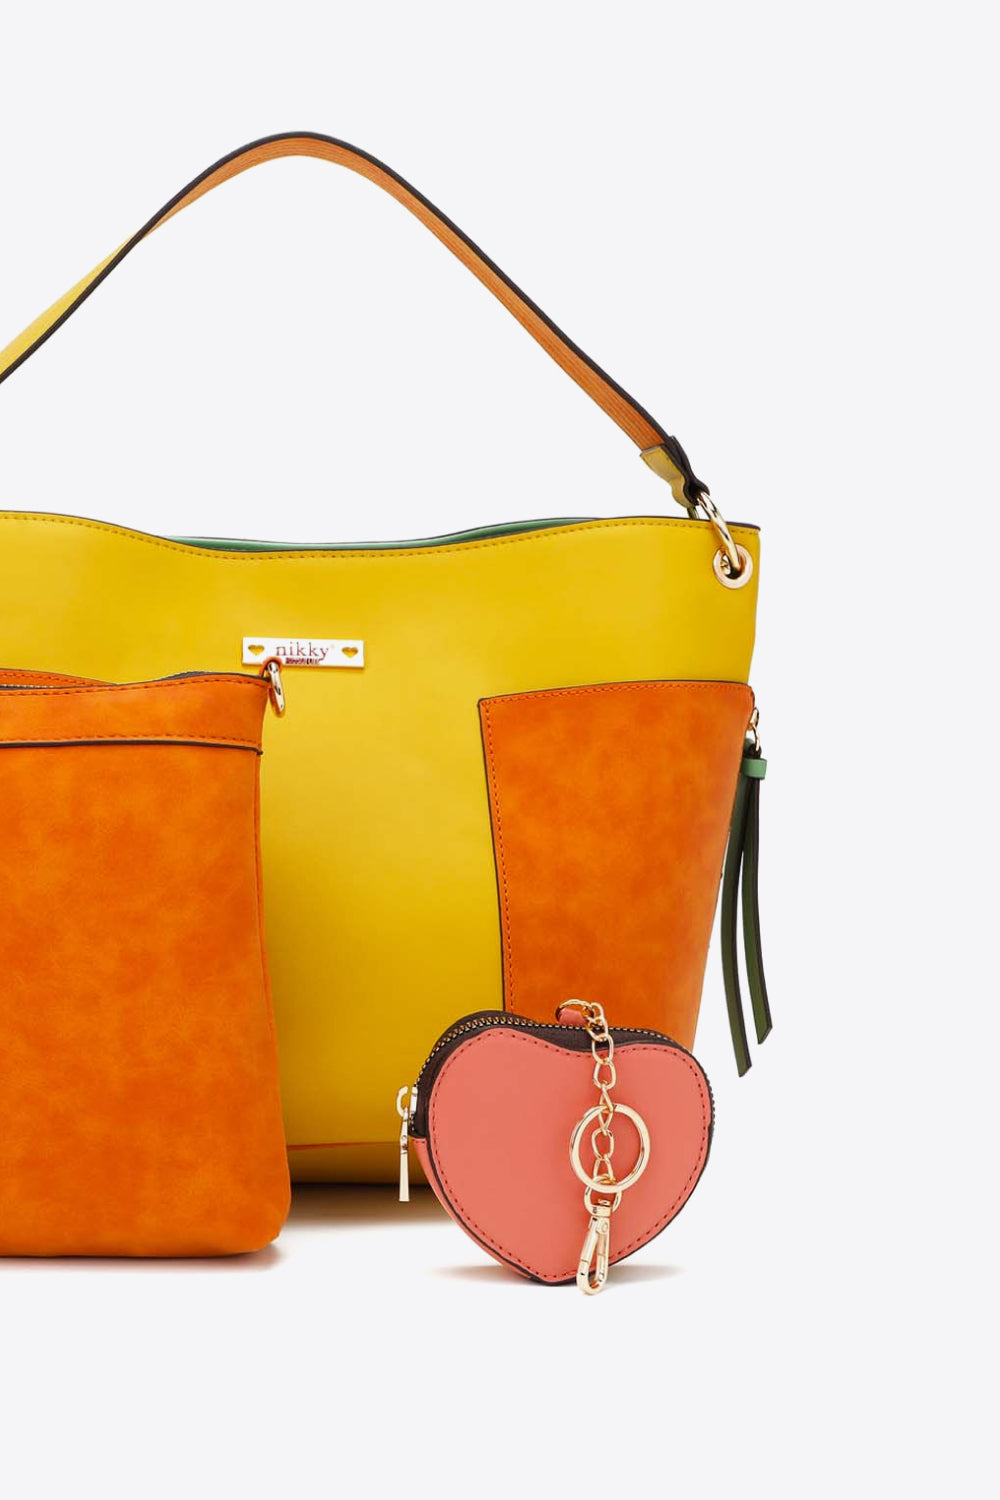 The Luxury Sweetheart Handbag w/ Free Gifts